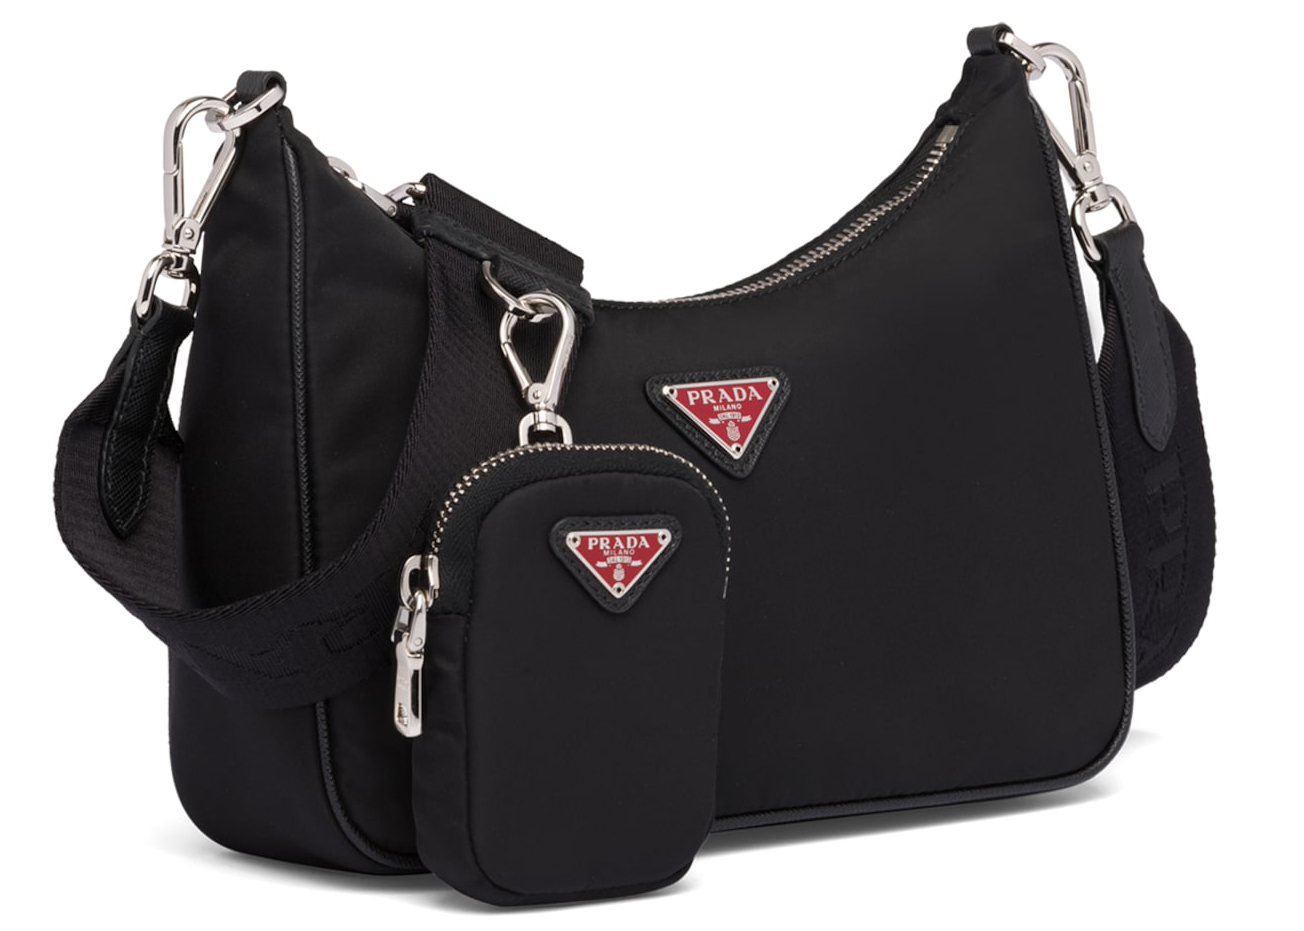 Prada Re-Edition 2005 Shoulder Bag Nylon Black/Red in Nylon with 